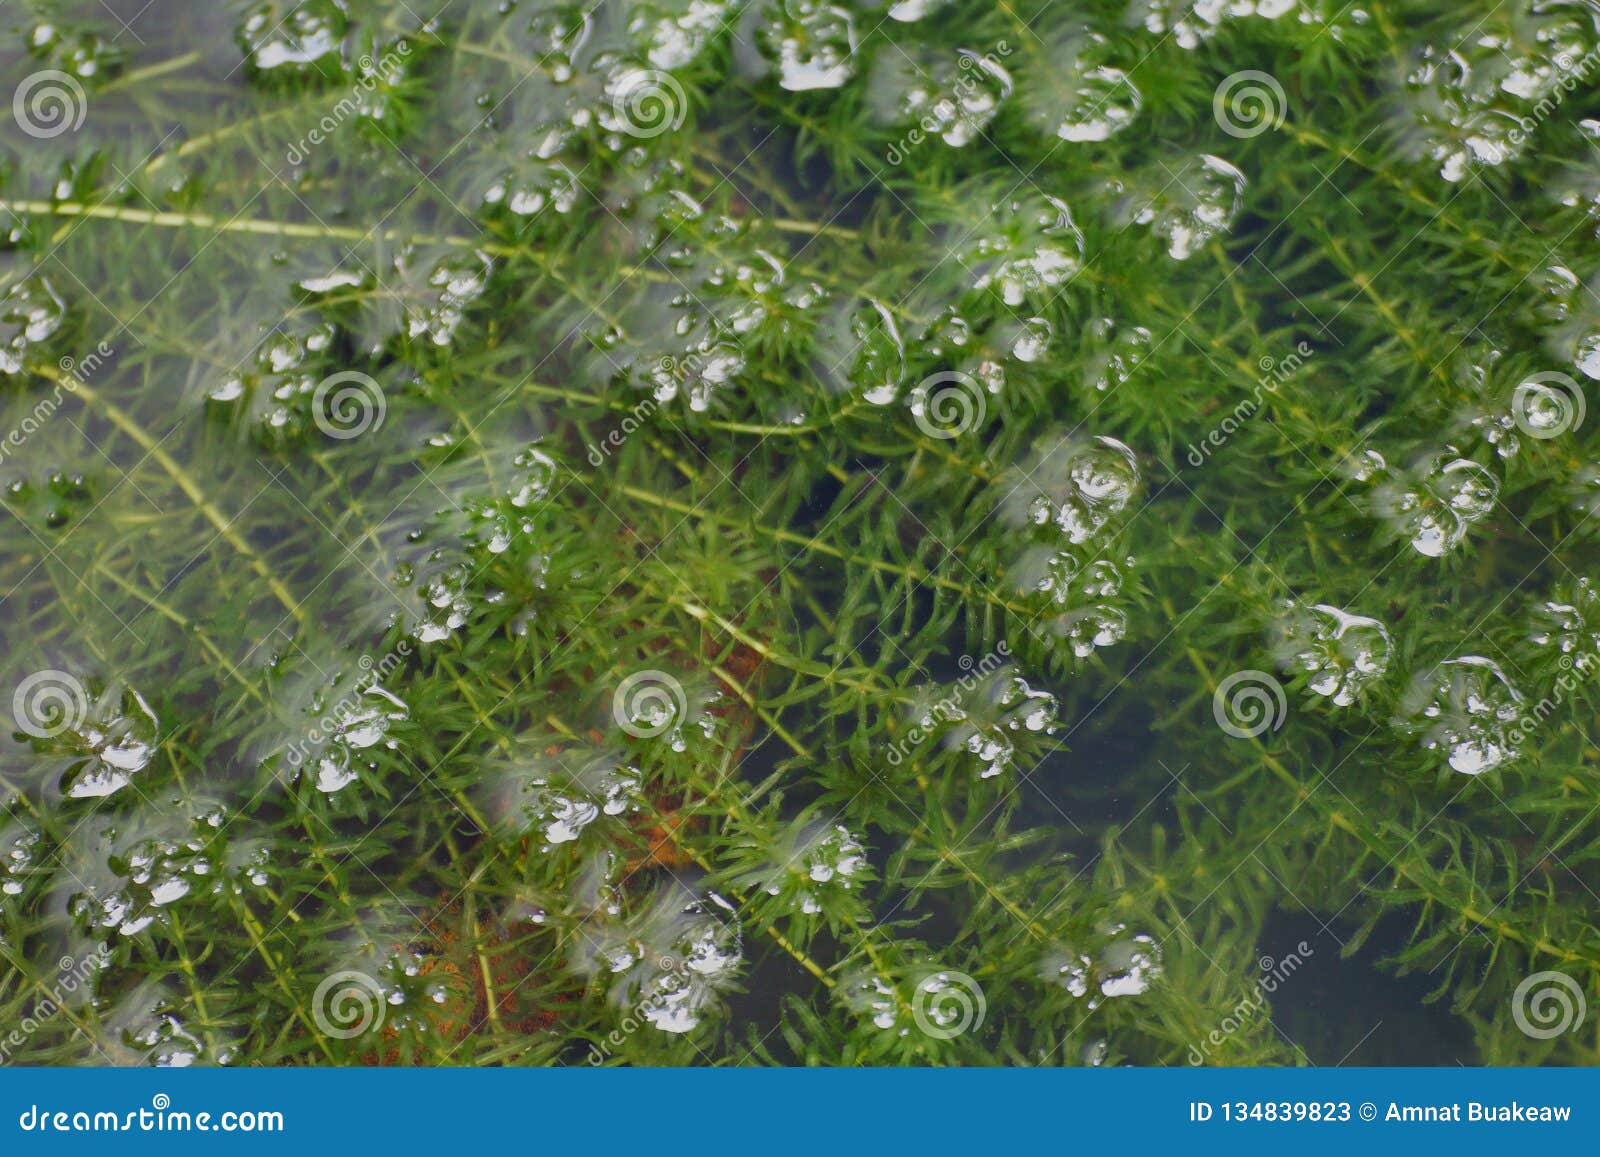 fresh green hydrilla verticillata growing in the water, hydrilla seaweed, hydrilla verticillata, hydrocharitaceae seaweed hydrilla